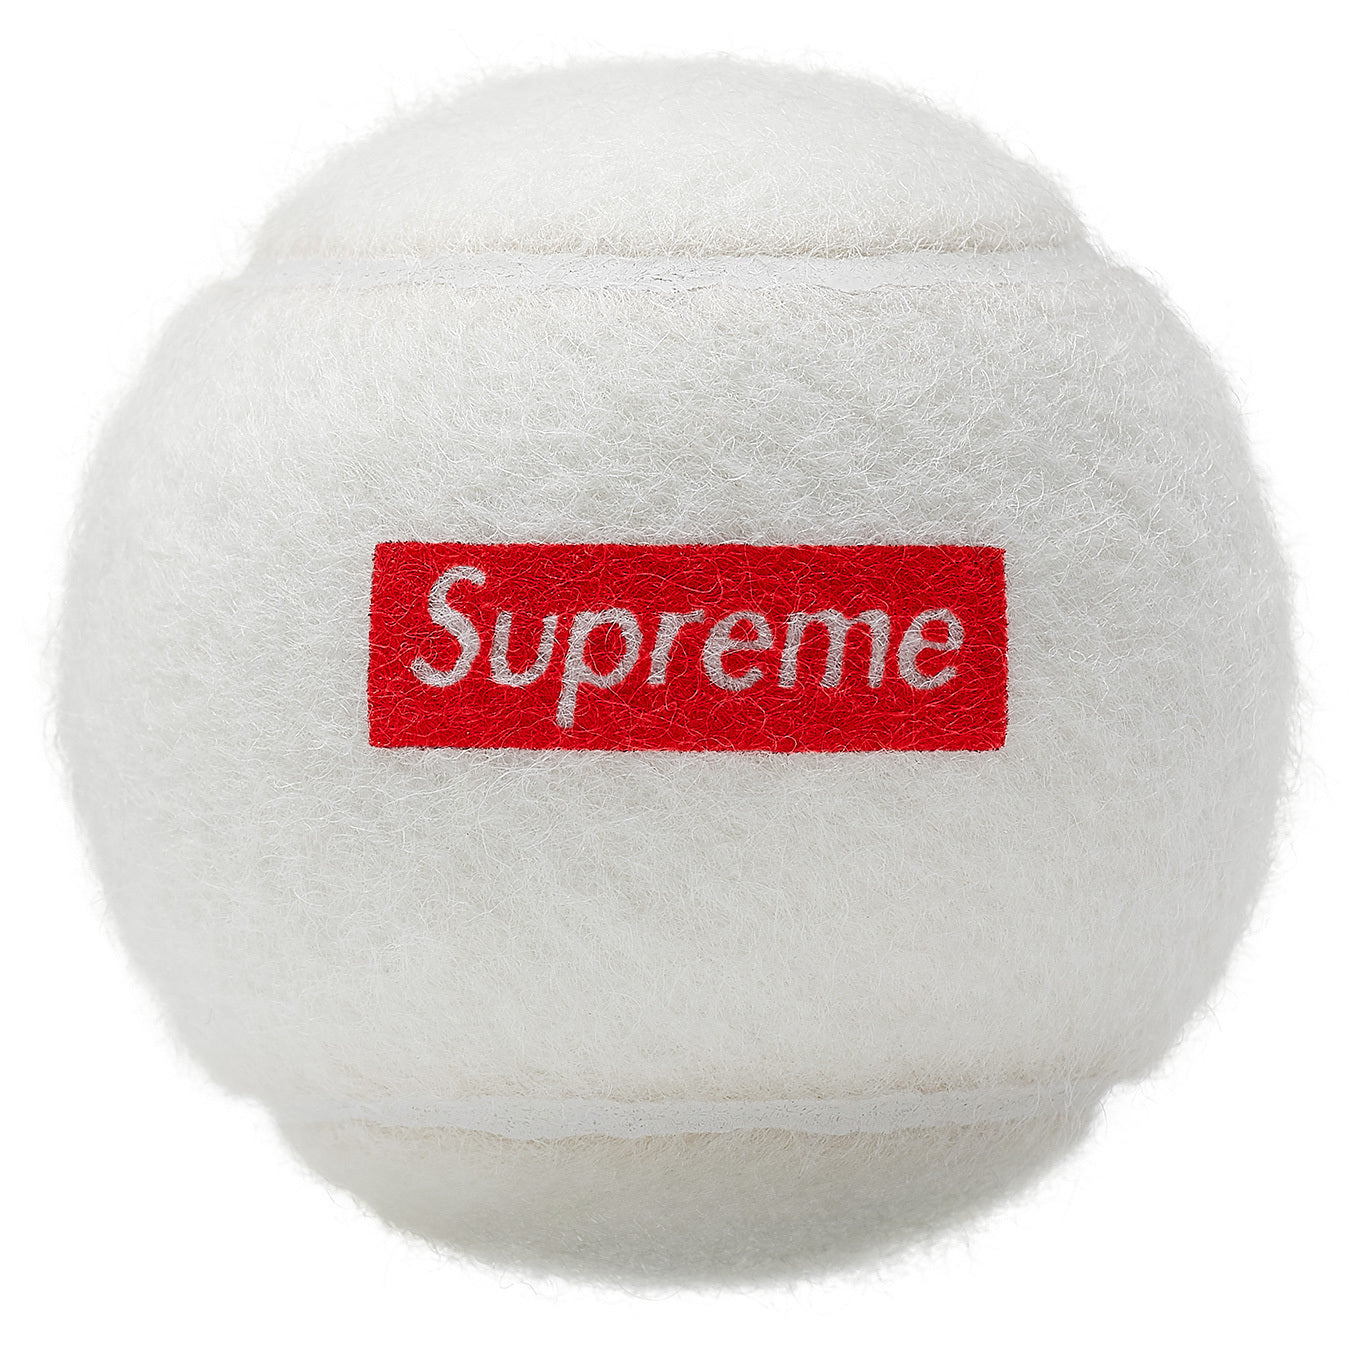 Supreme Wilson Tennis Balls from Supreme